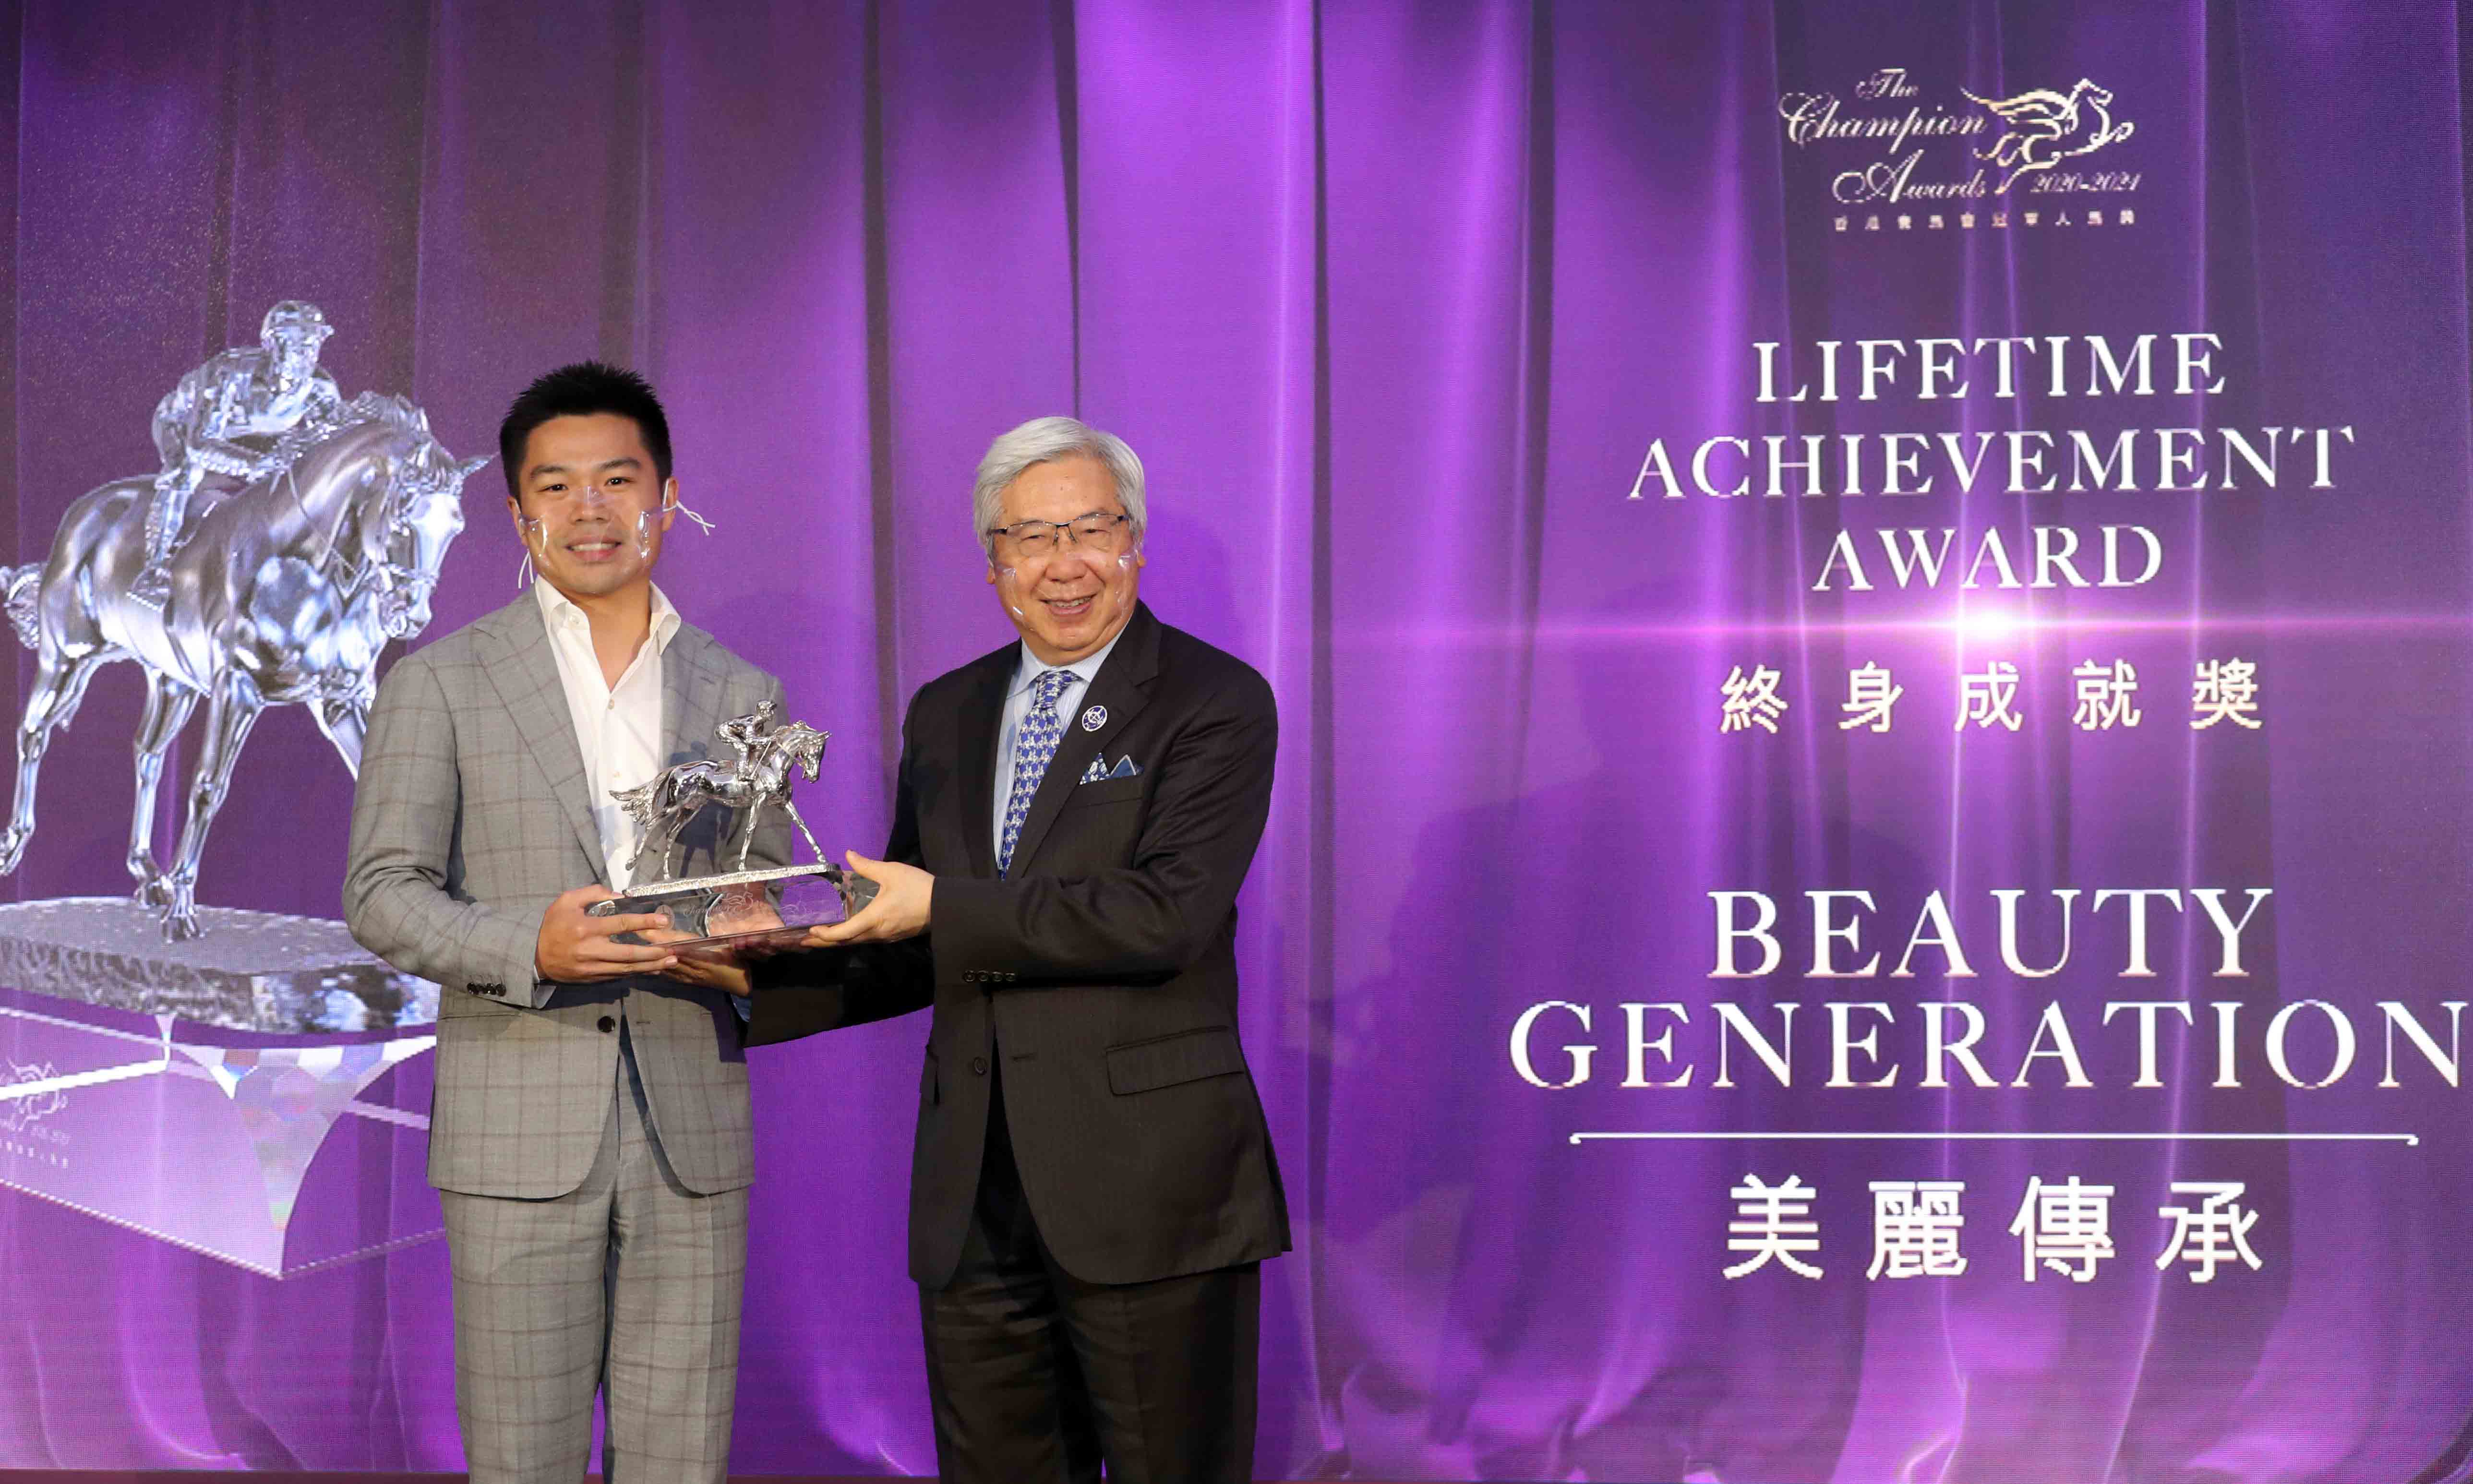 Dr. Eric Li, Steward of The Hong Kong Jockey Club, presents the Lifetime Achievement Award trophy to Mr. Patrick Kwok Ho Chuen, owner of Beauty Generation.